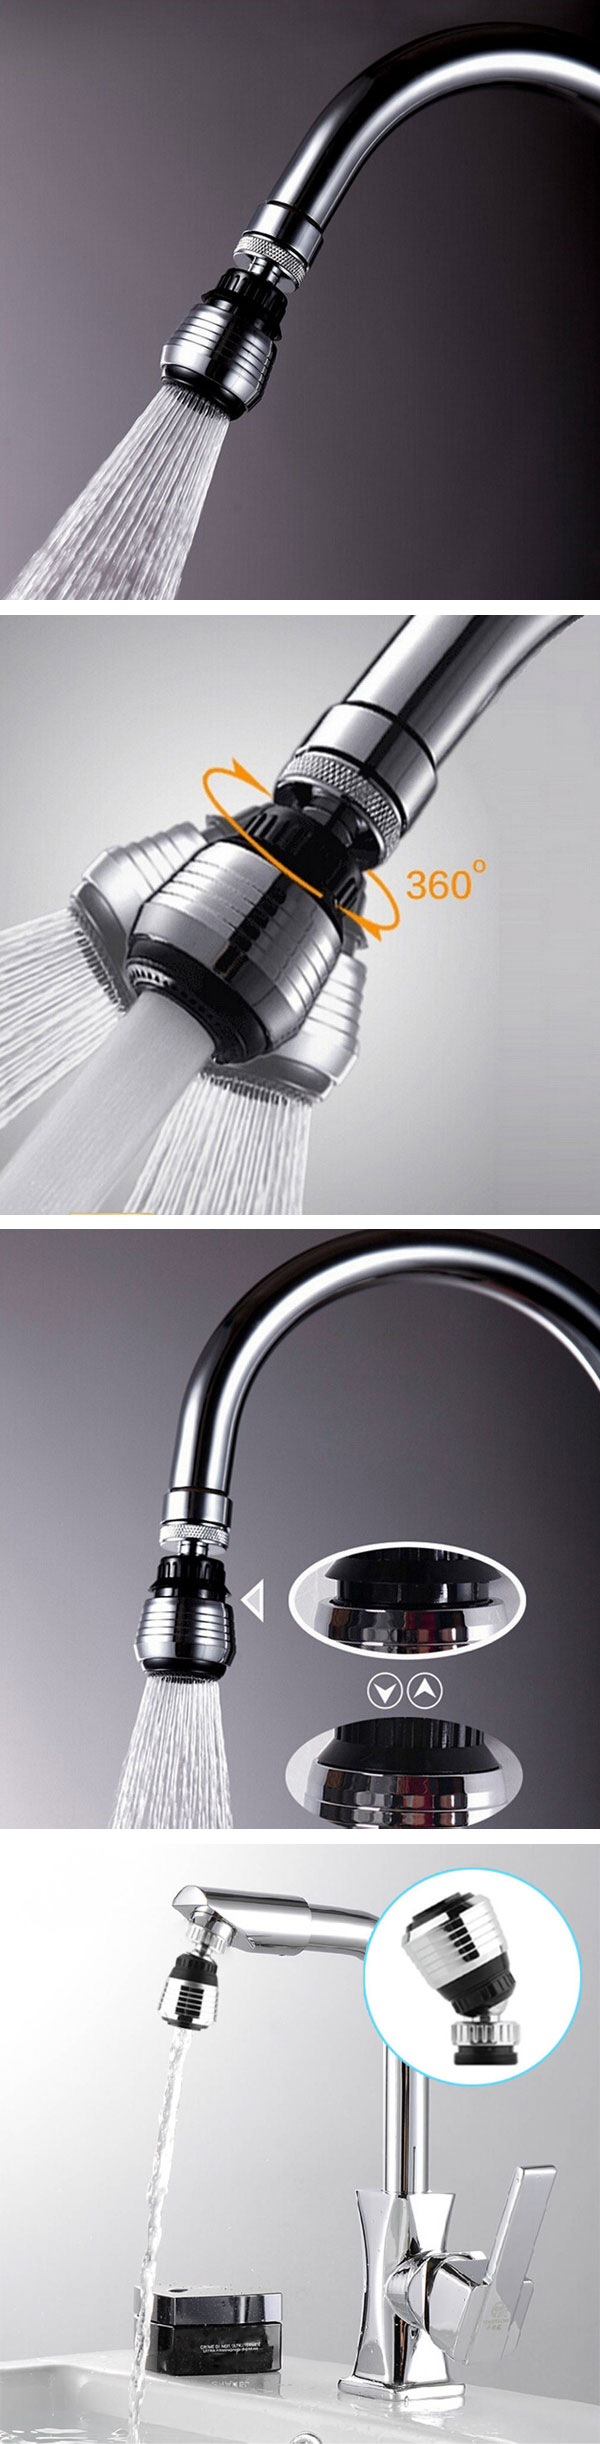 360deg-Rotate-Tap-Bubbler-Filter-Aerator-Net-Water-Saving-Device-Nozzle-Faucet-Fitting-943078